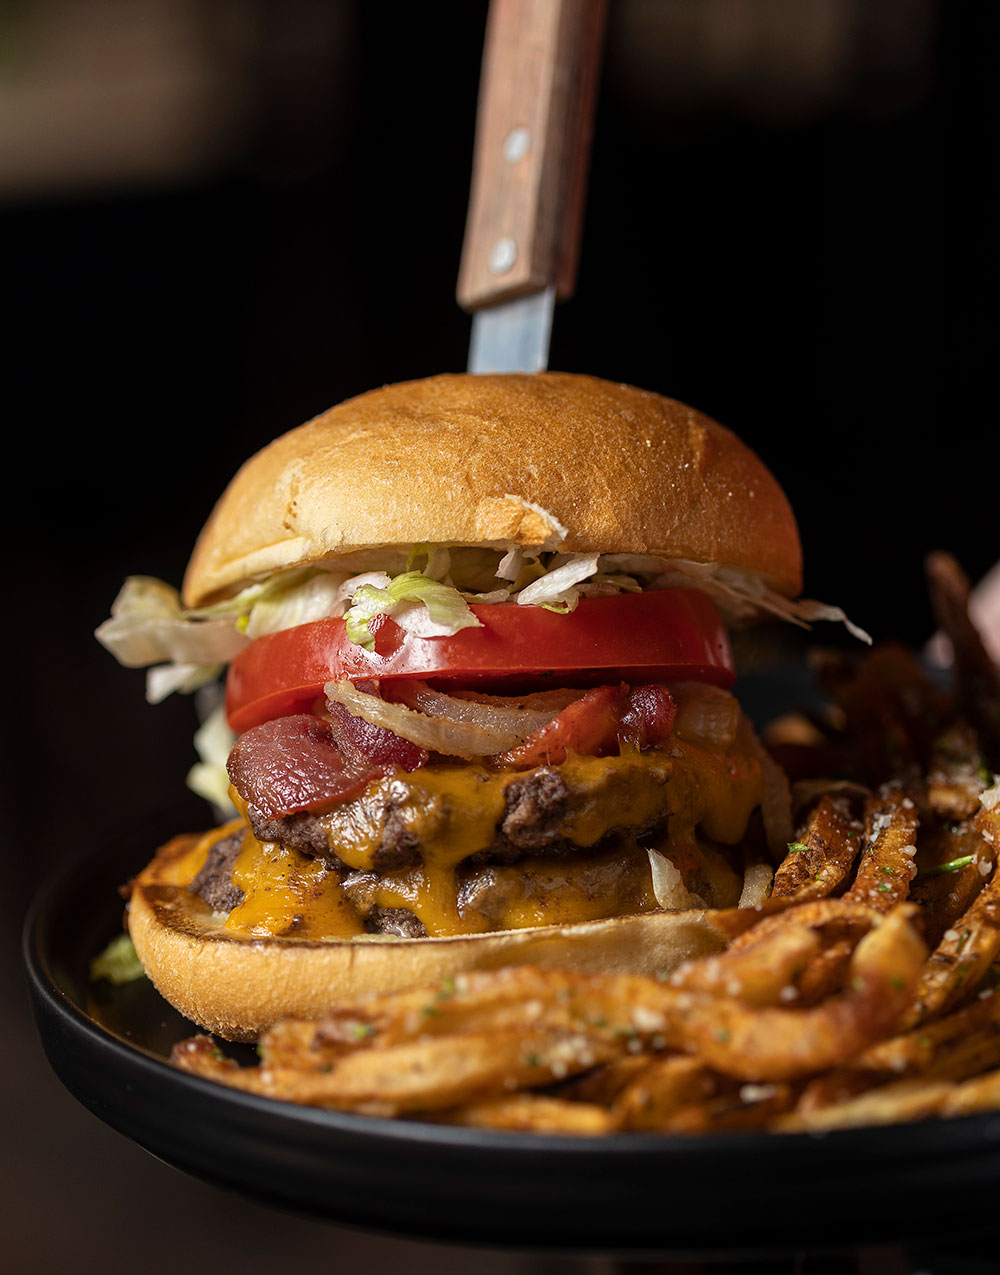 The farmhouse burger contains a blend of brisket, chuck, and short rib.